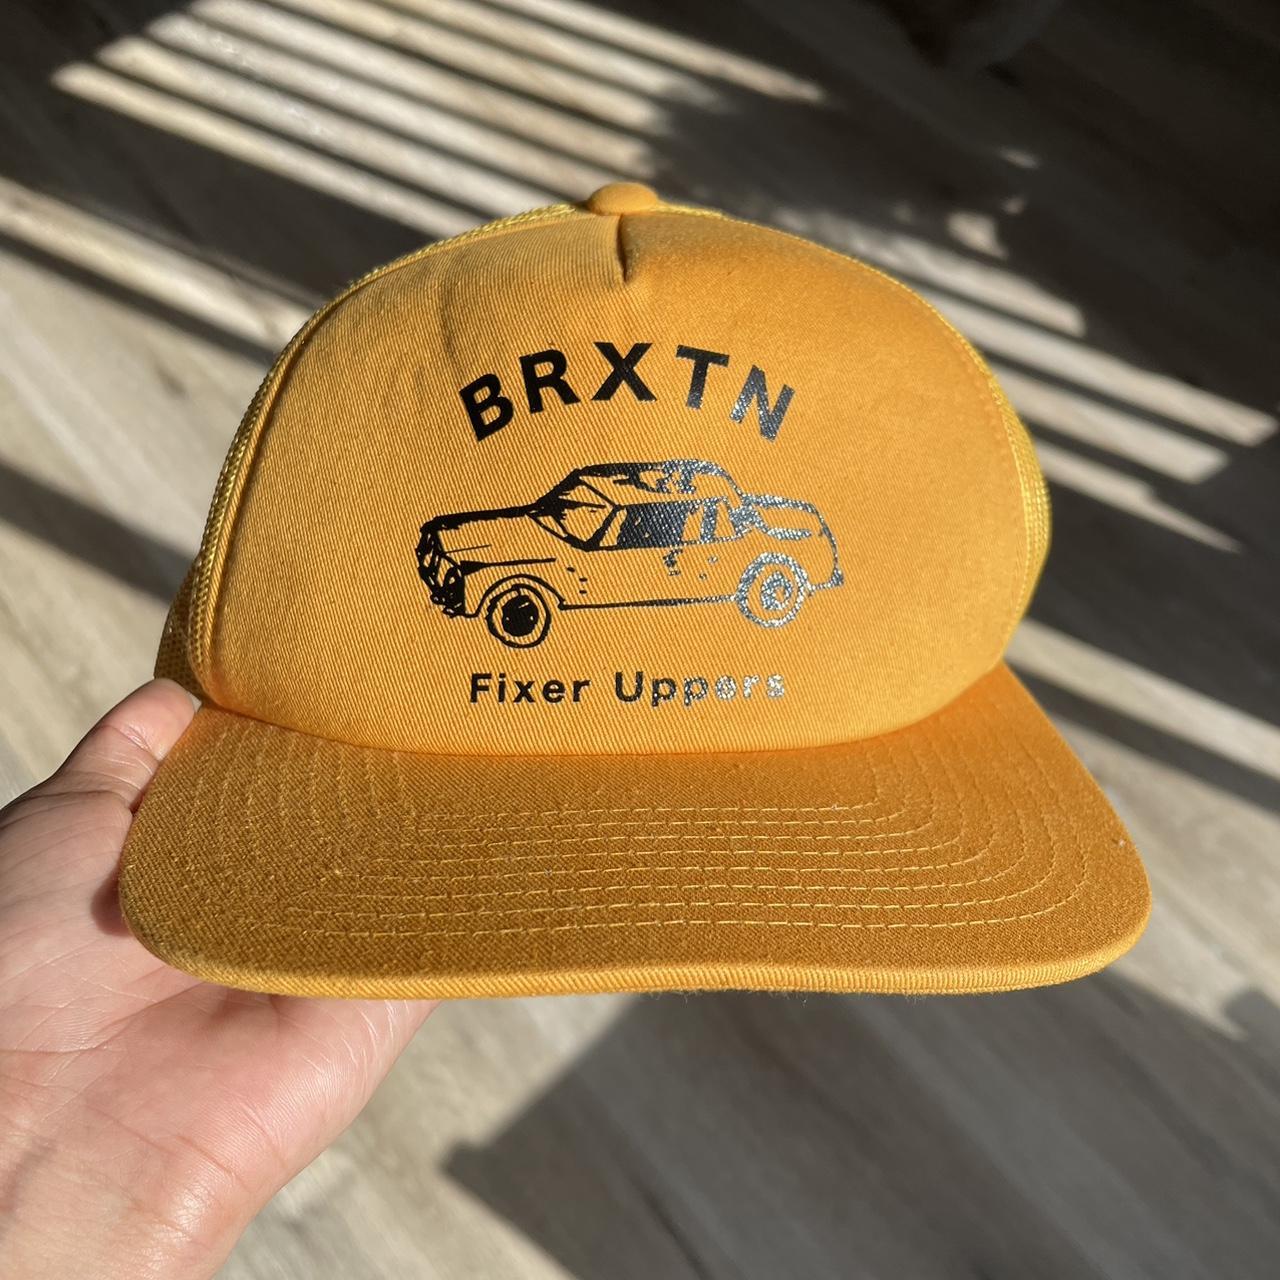 Brixton Men's Yellow and Black Hat